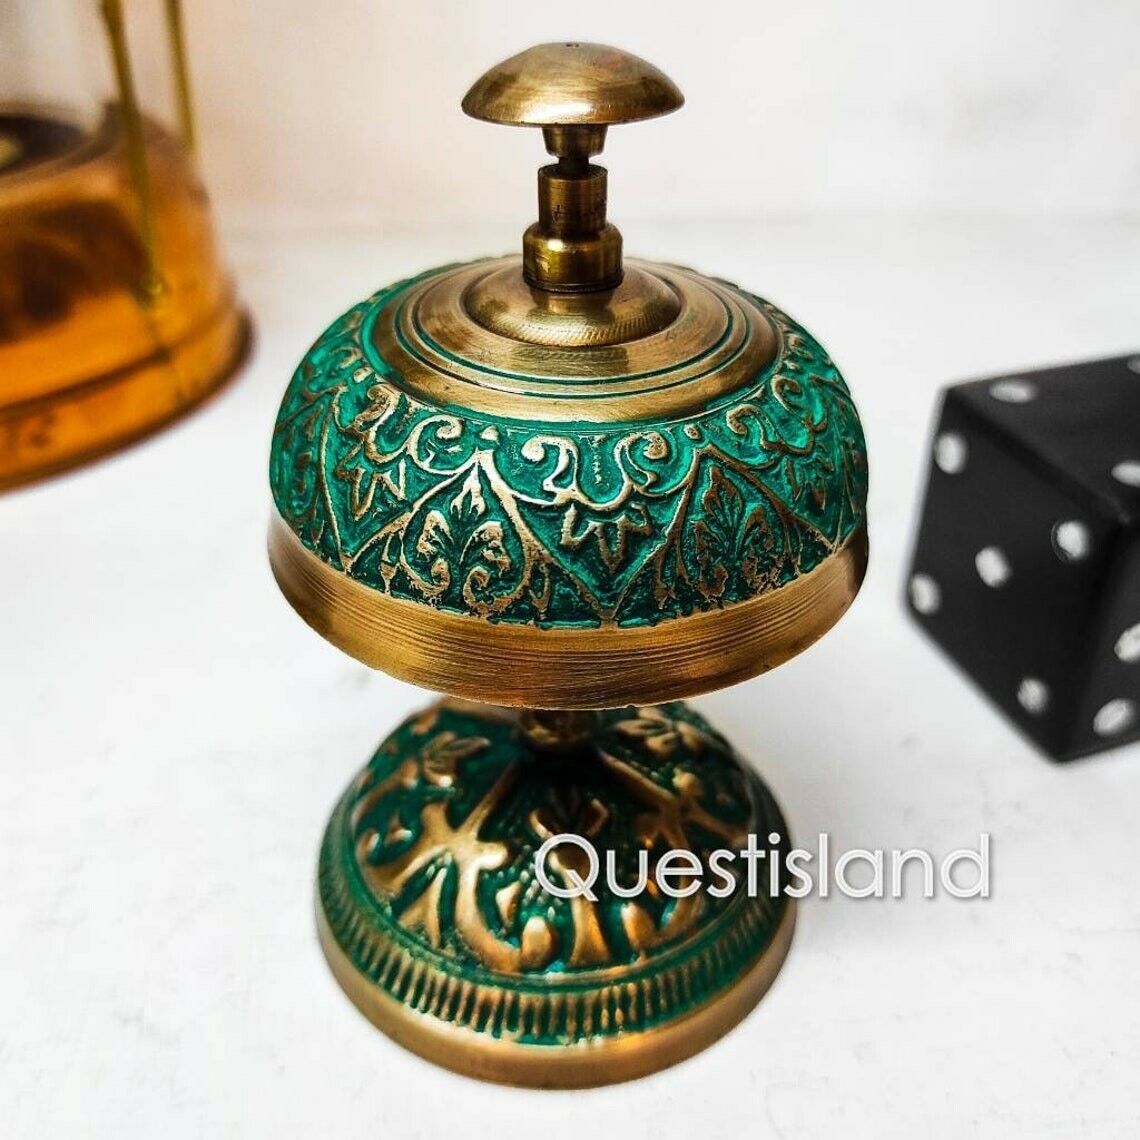 Antique Green Finish Brass Desk Bell Designer Collectible Gift TableTop Item